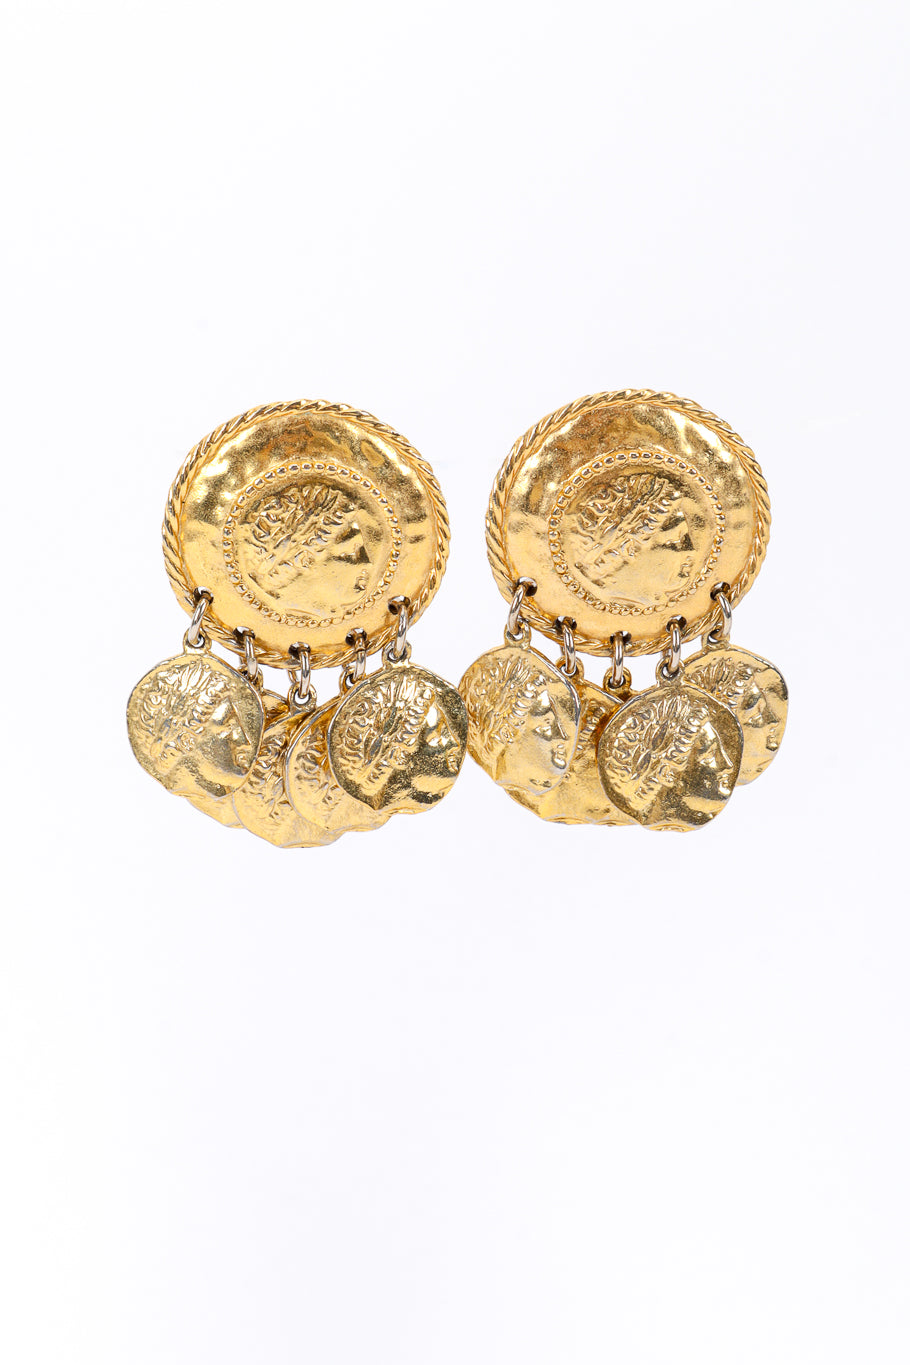 Vintage Butler & Wilson Roman Coin Charm Earrings front @recessla